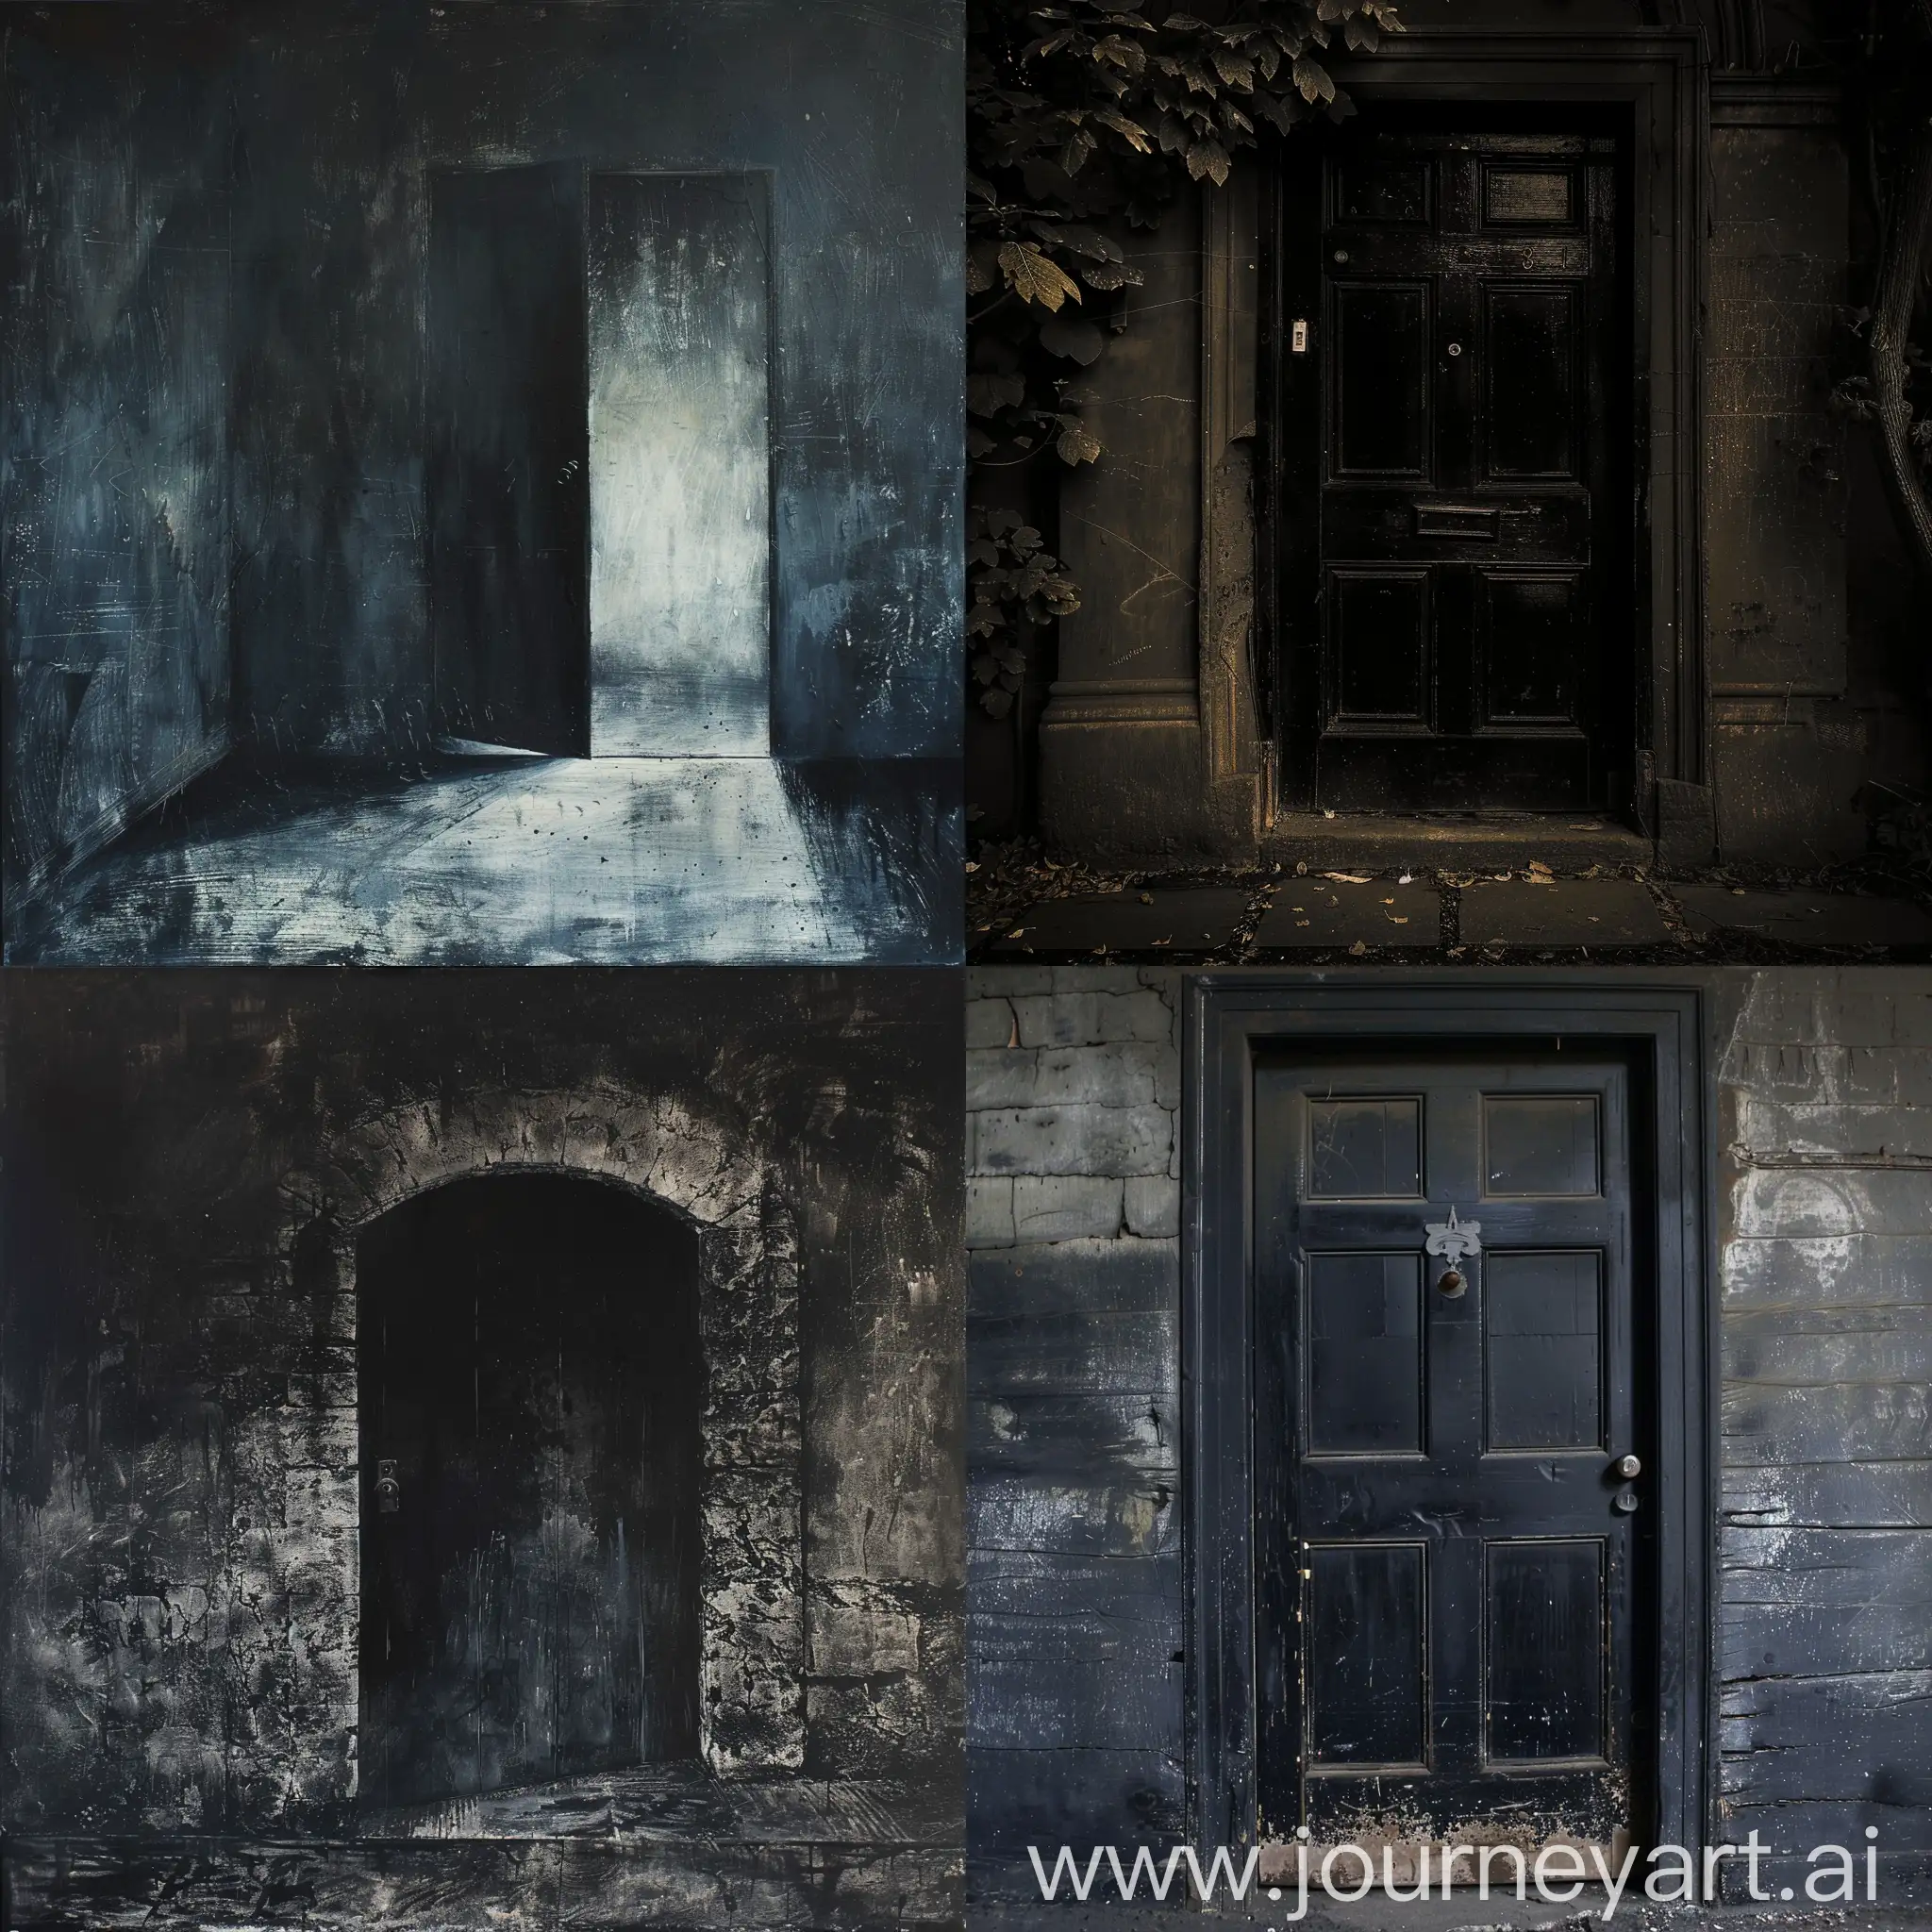 Mysterious-Dark-Door-in-Isolated-Setting